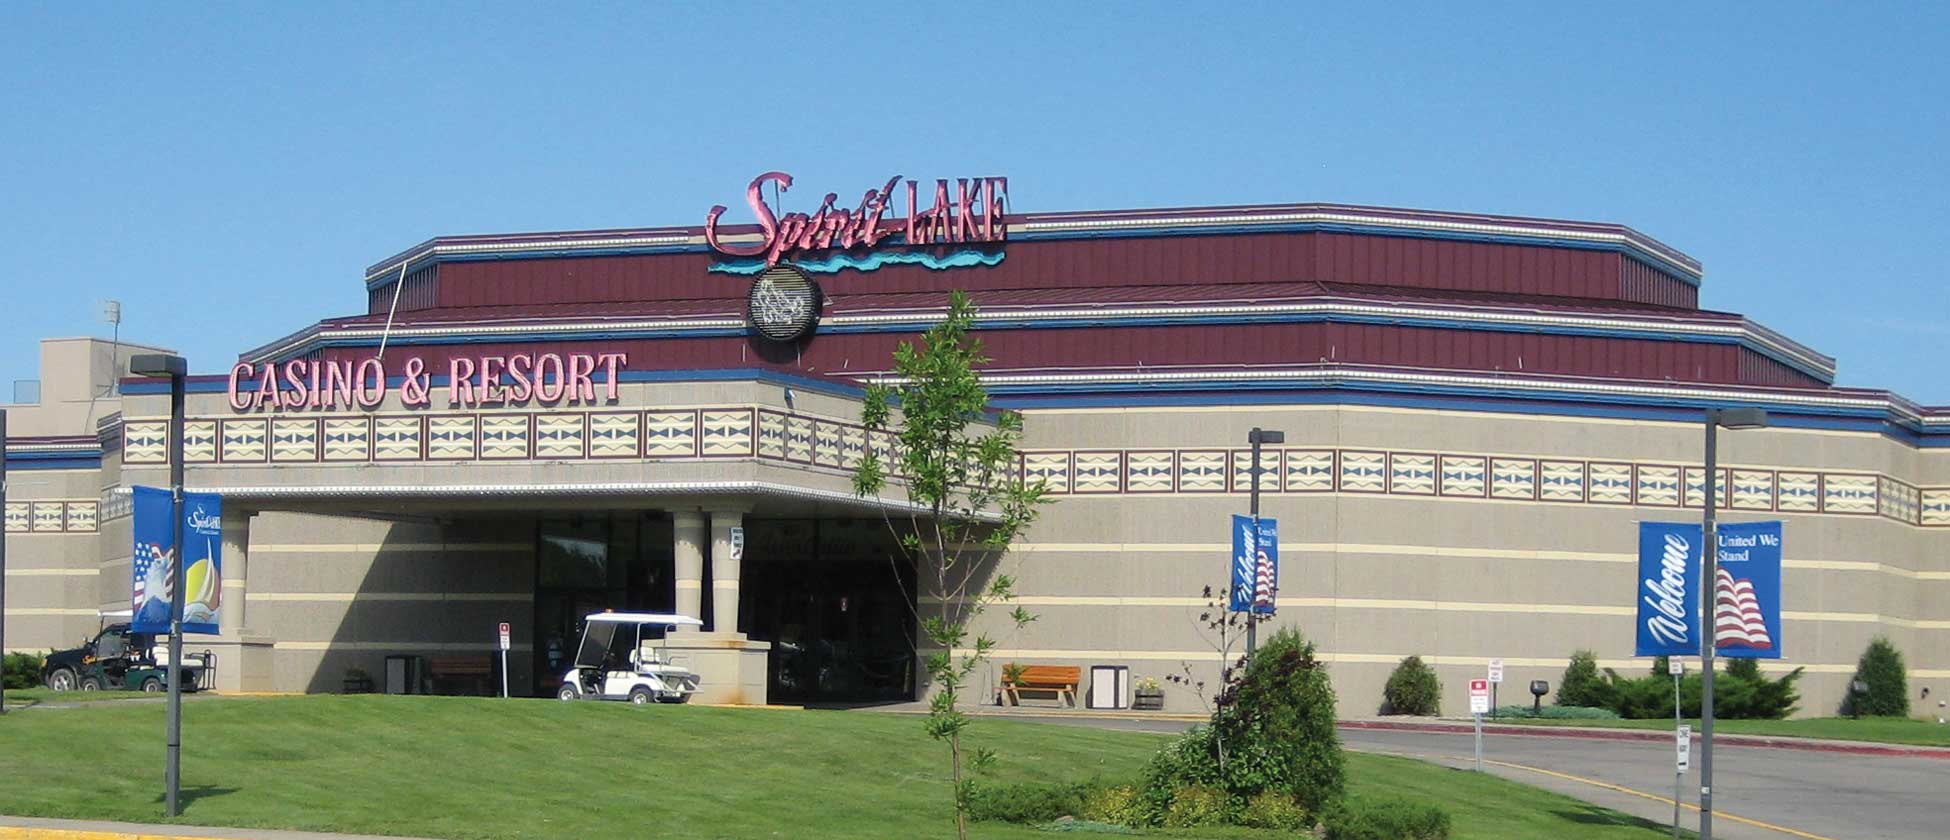 The Spirit Lake Casino and Resort south of Devils Lake.